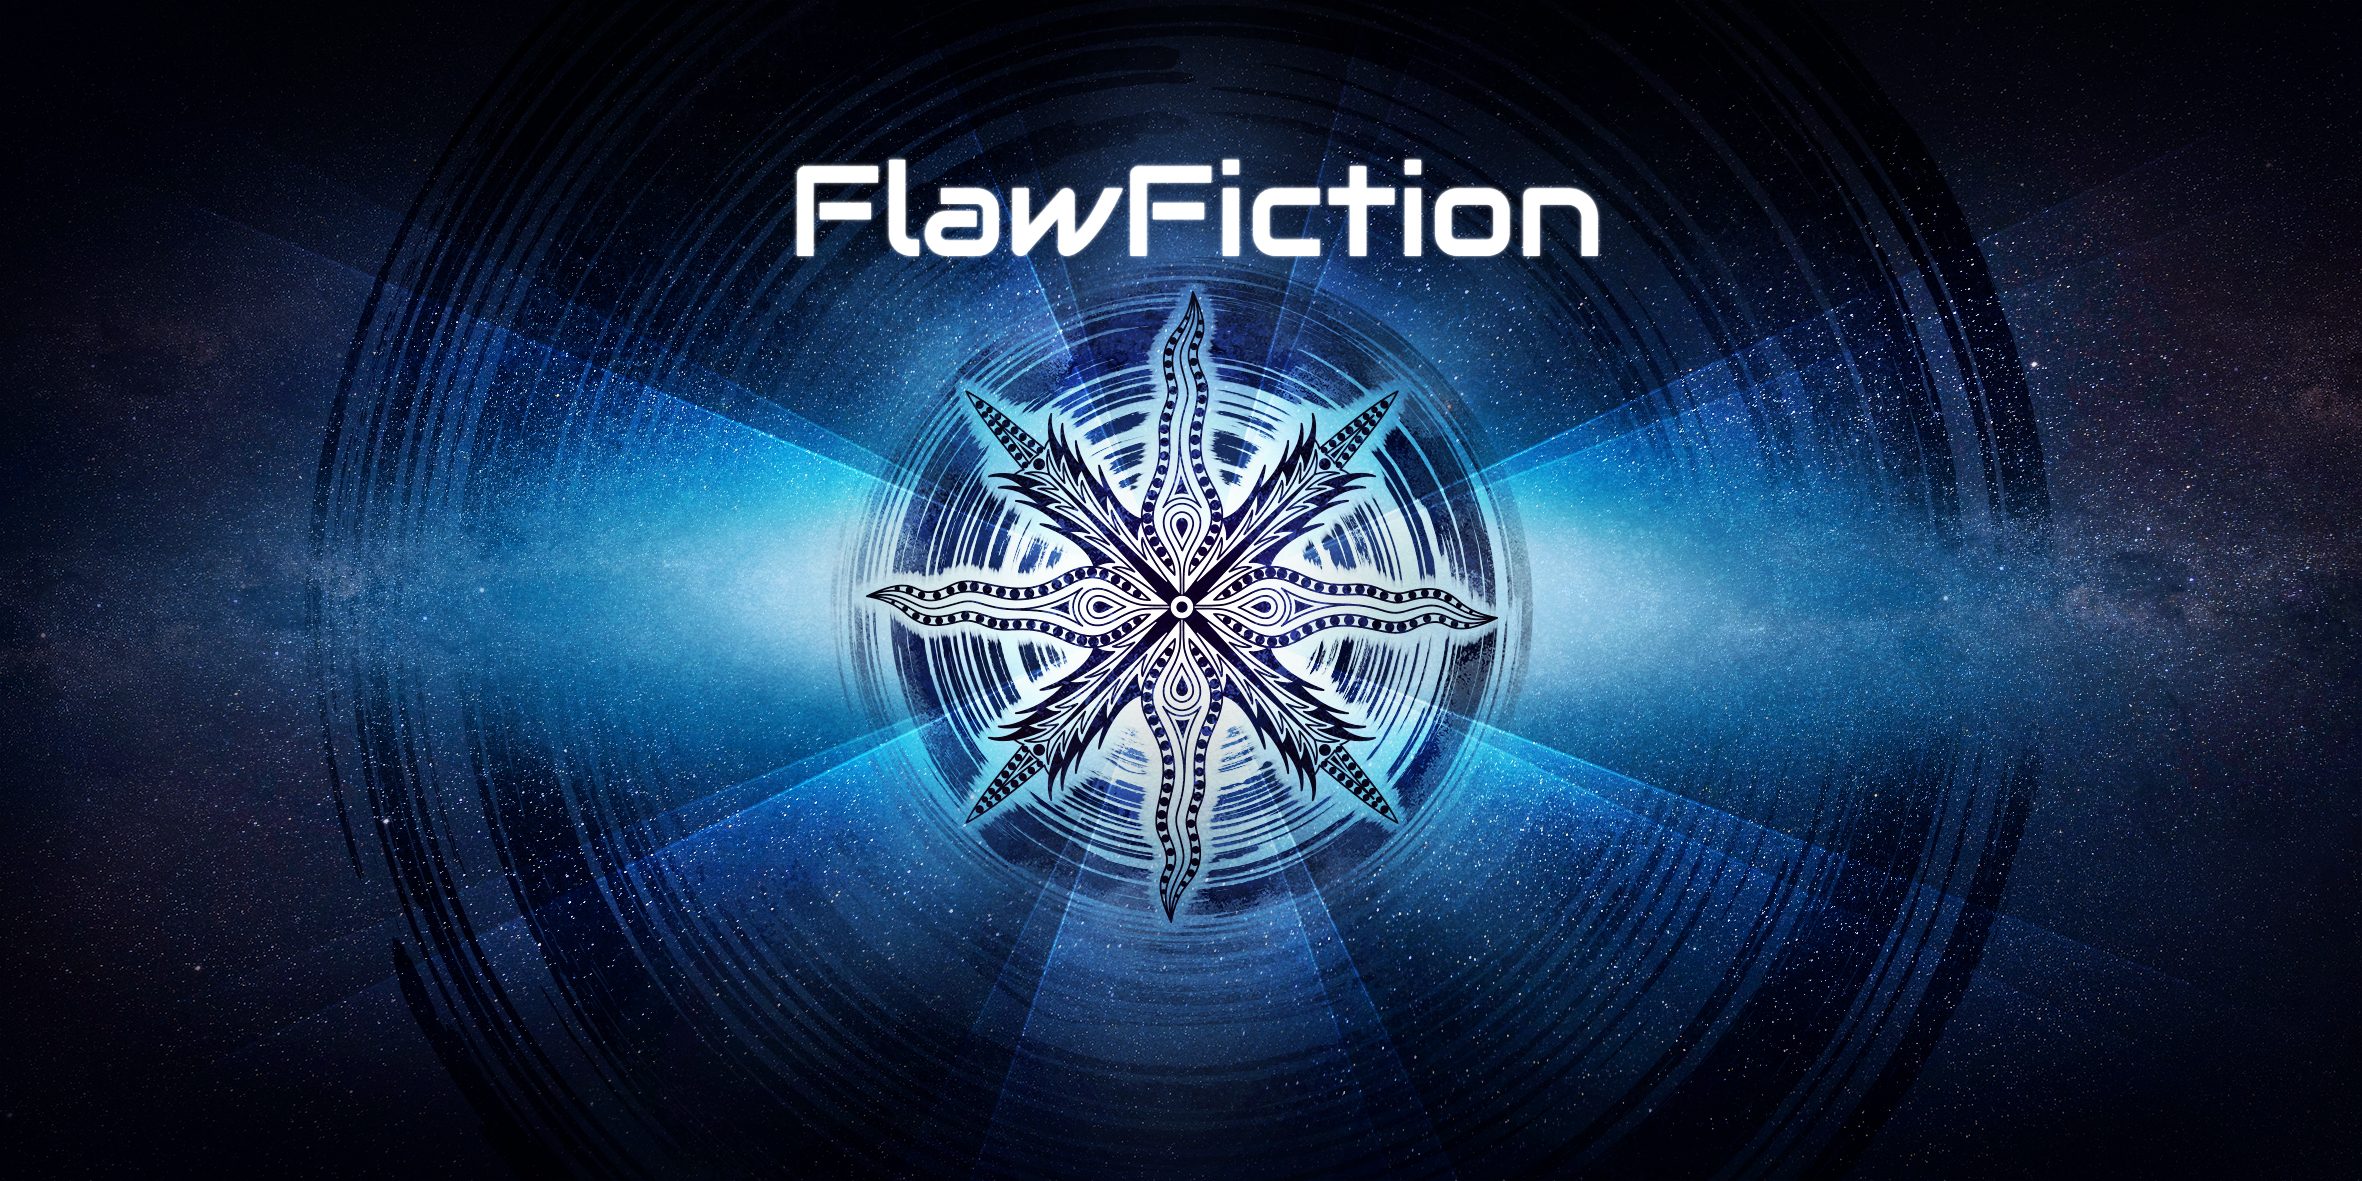 FlawFiction